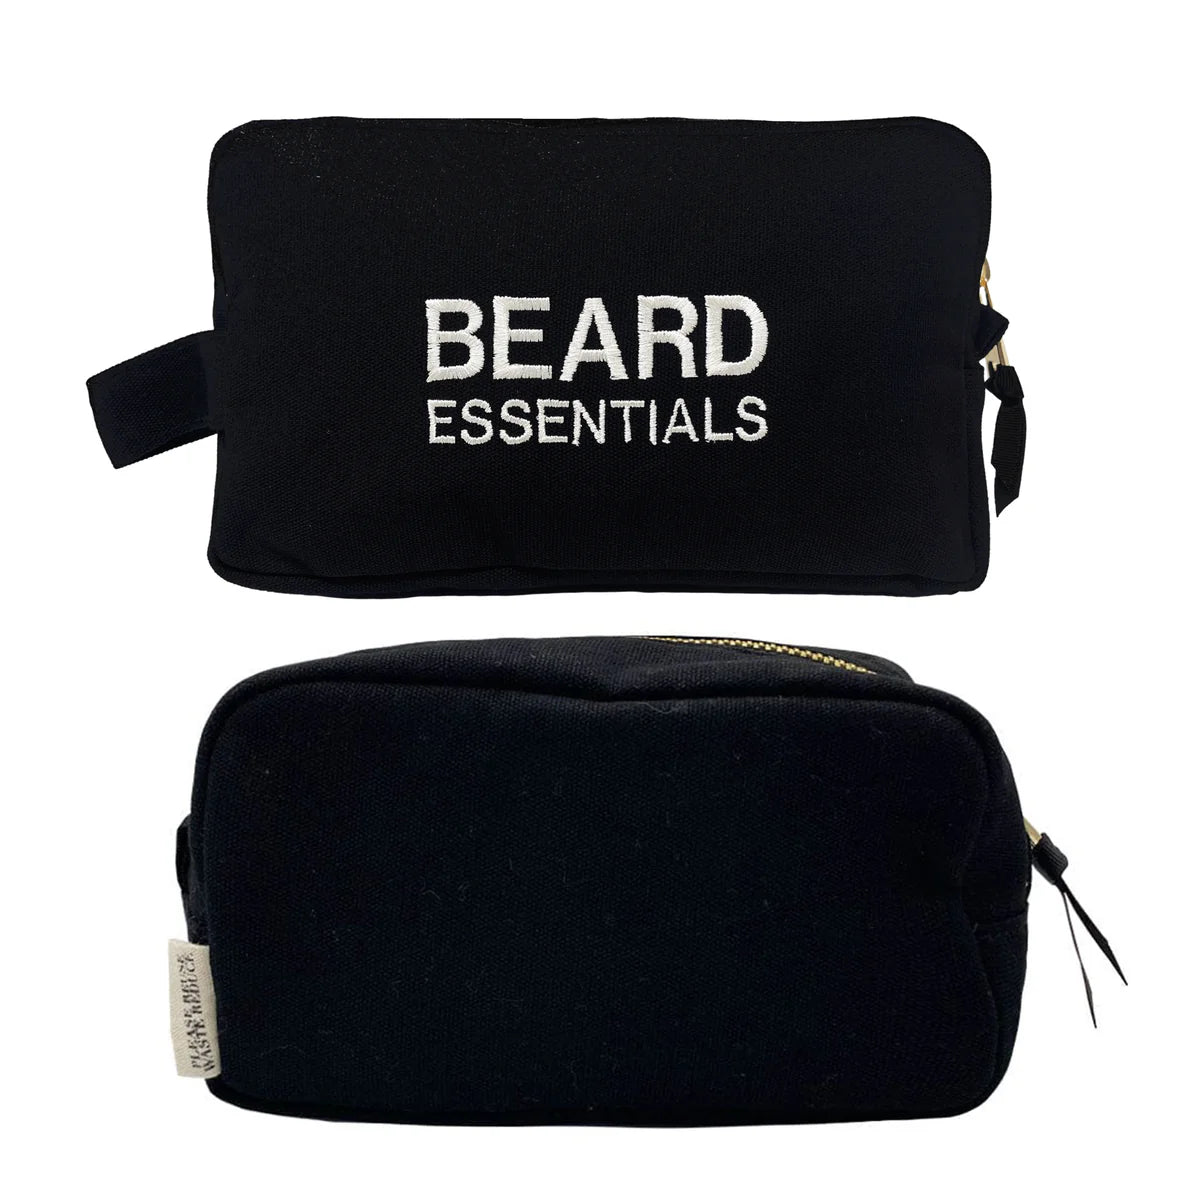 Travel Beard Care Essentials for Men